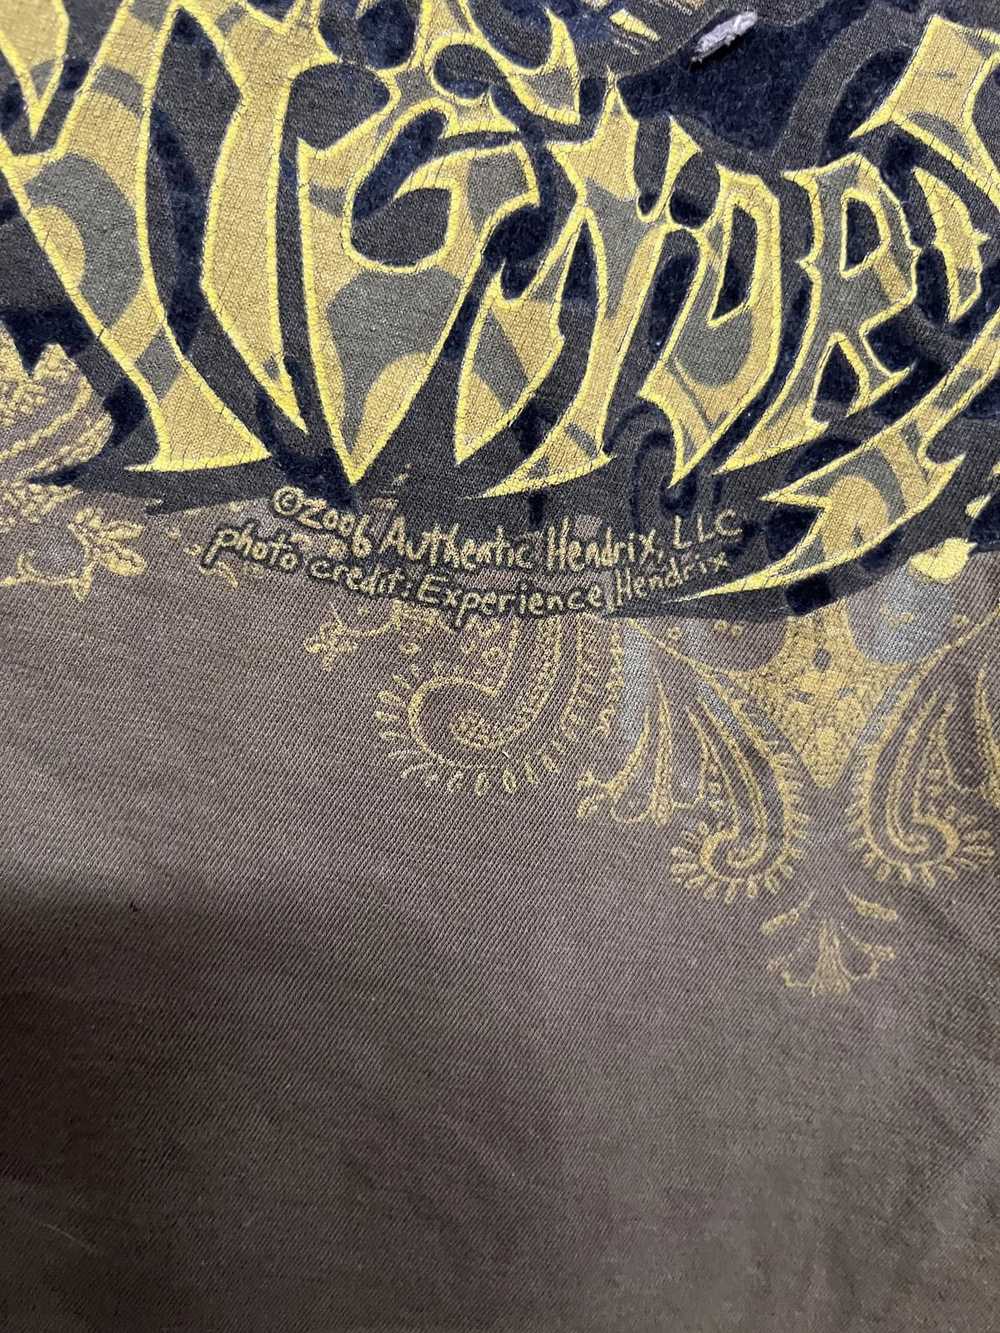 Designer Jimi Hendrix Y2k T-shirt - 2006 Copyrigh… - image 4